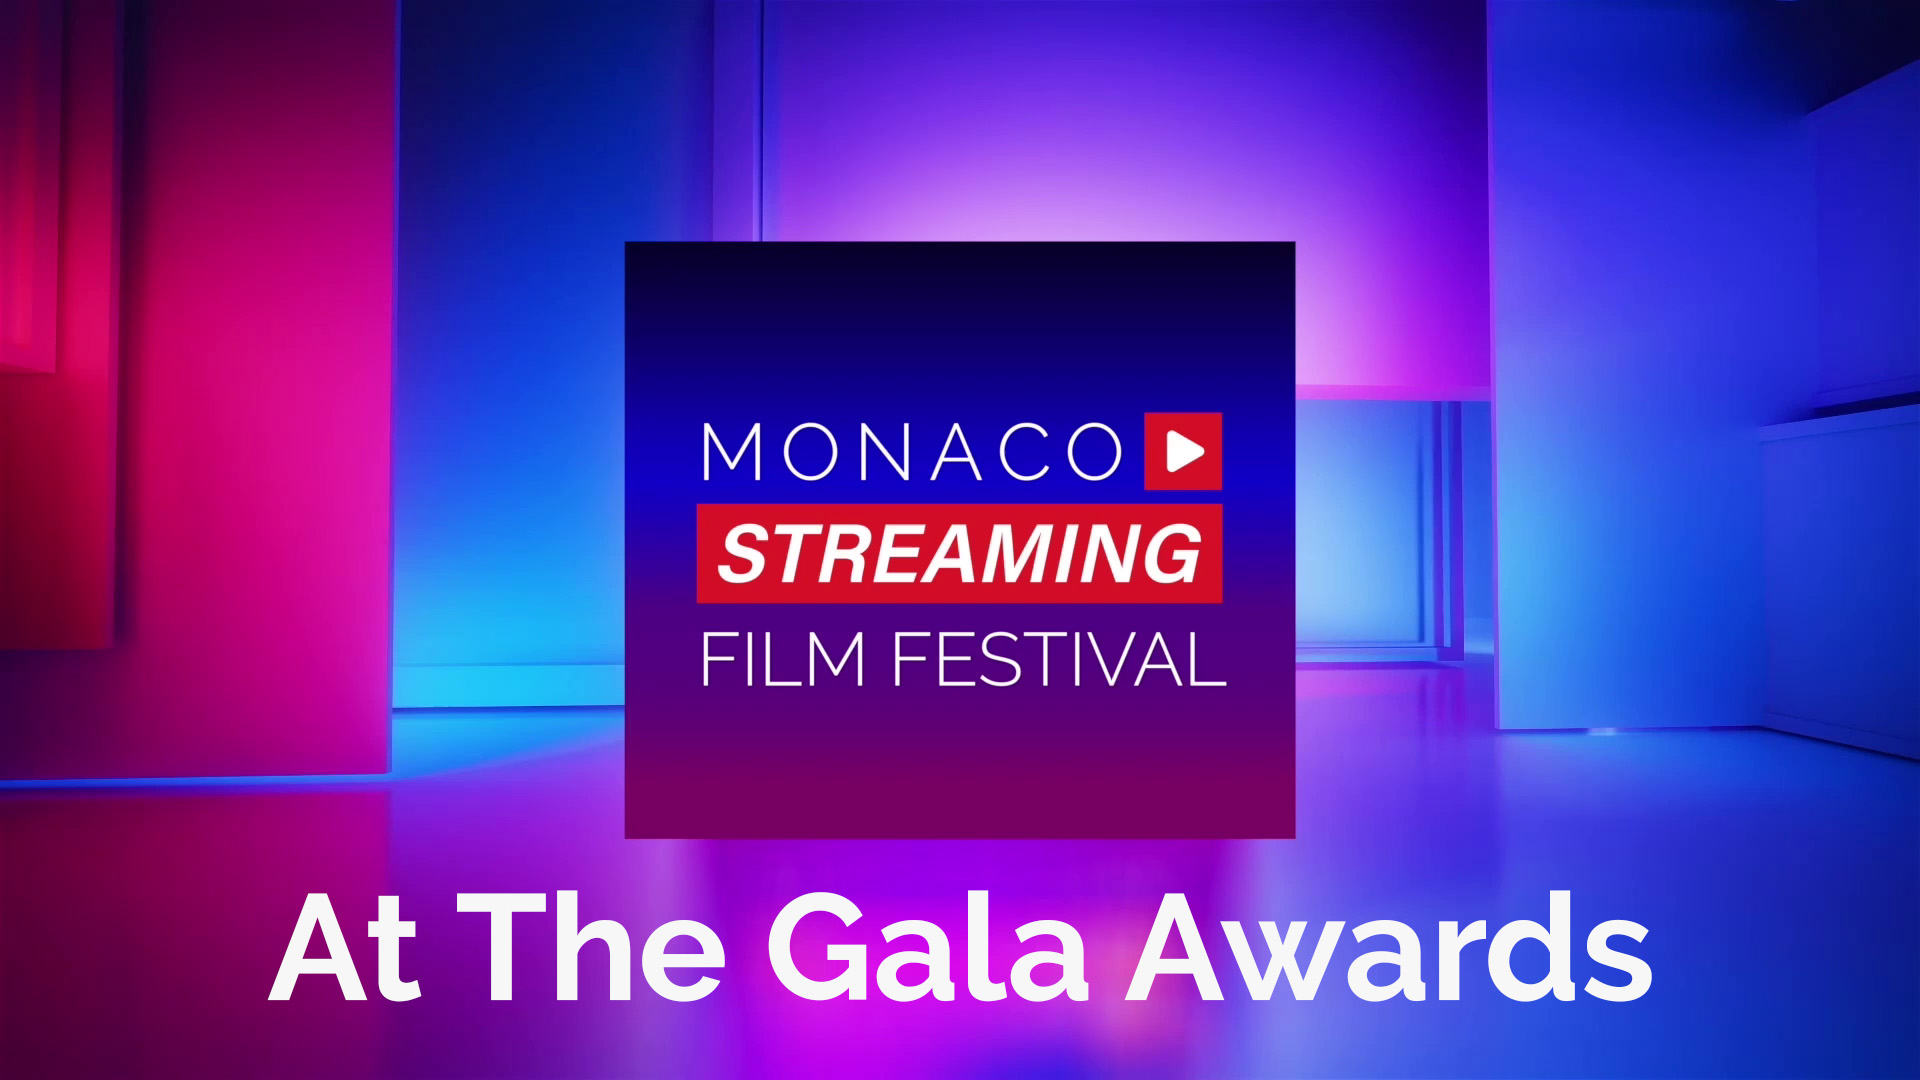 Monaco Streaming Film Festival 2022 At The Gala Awards